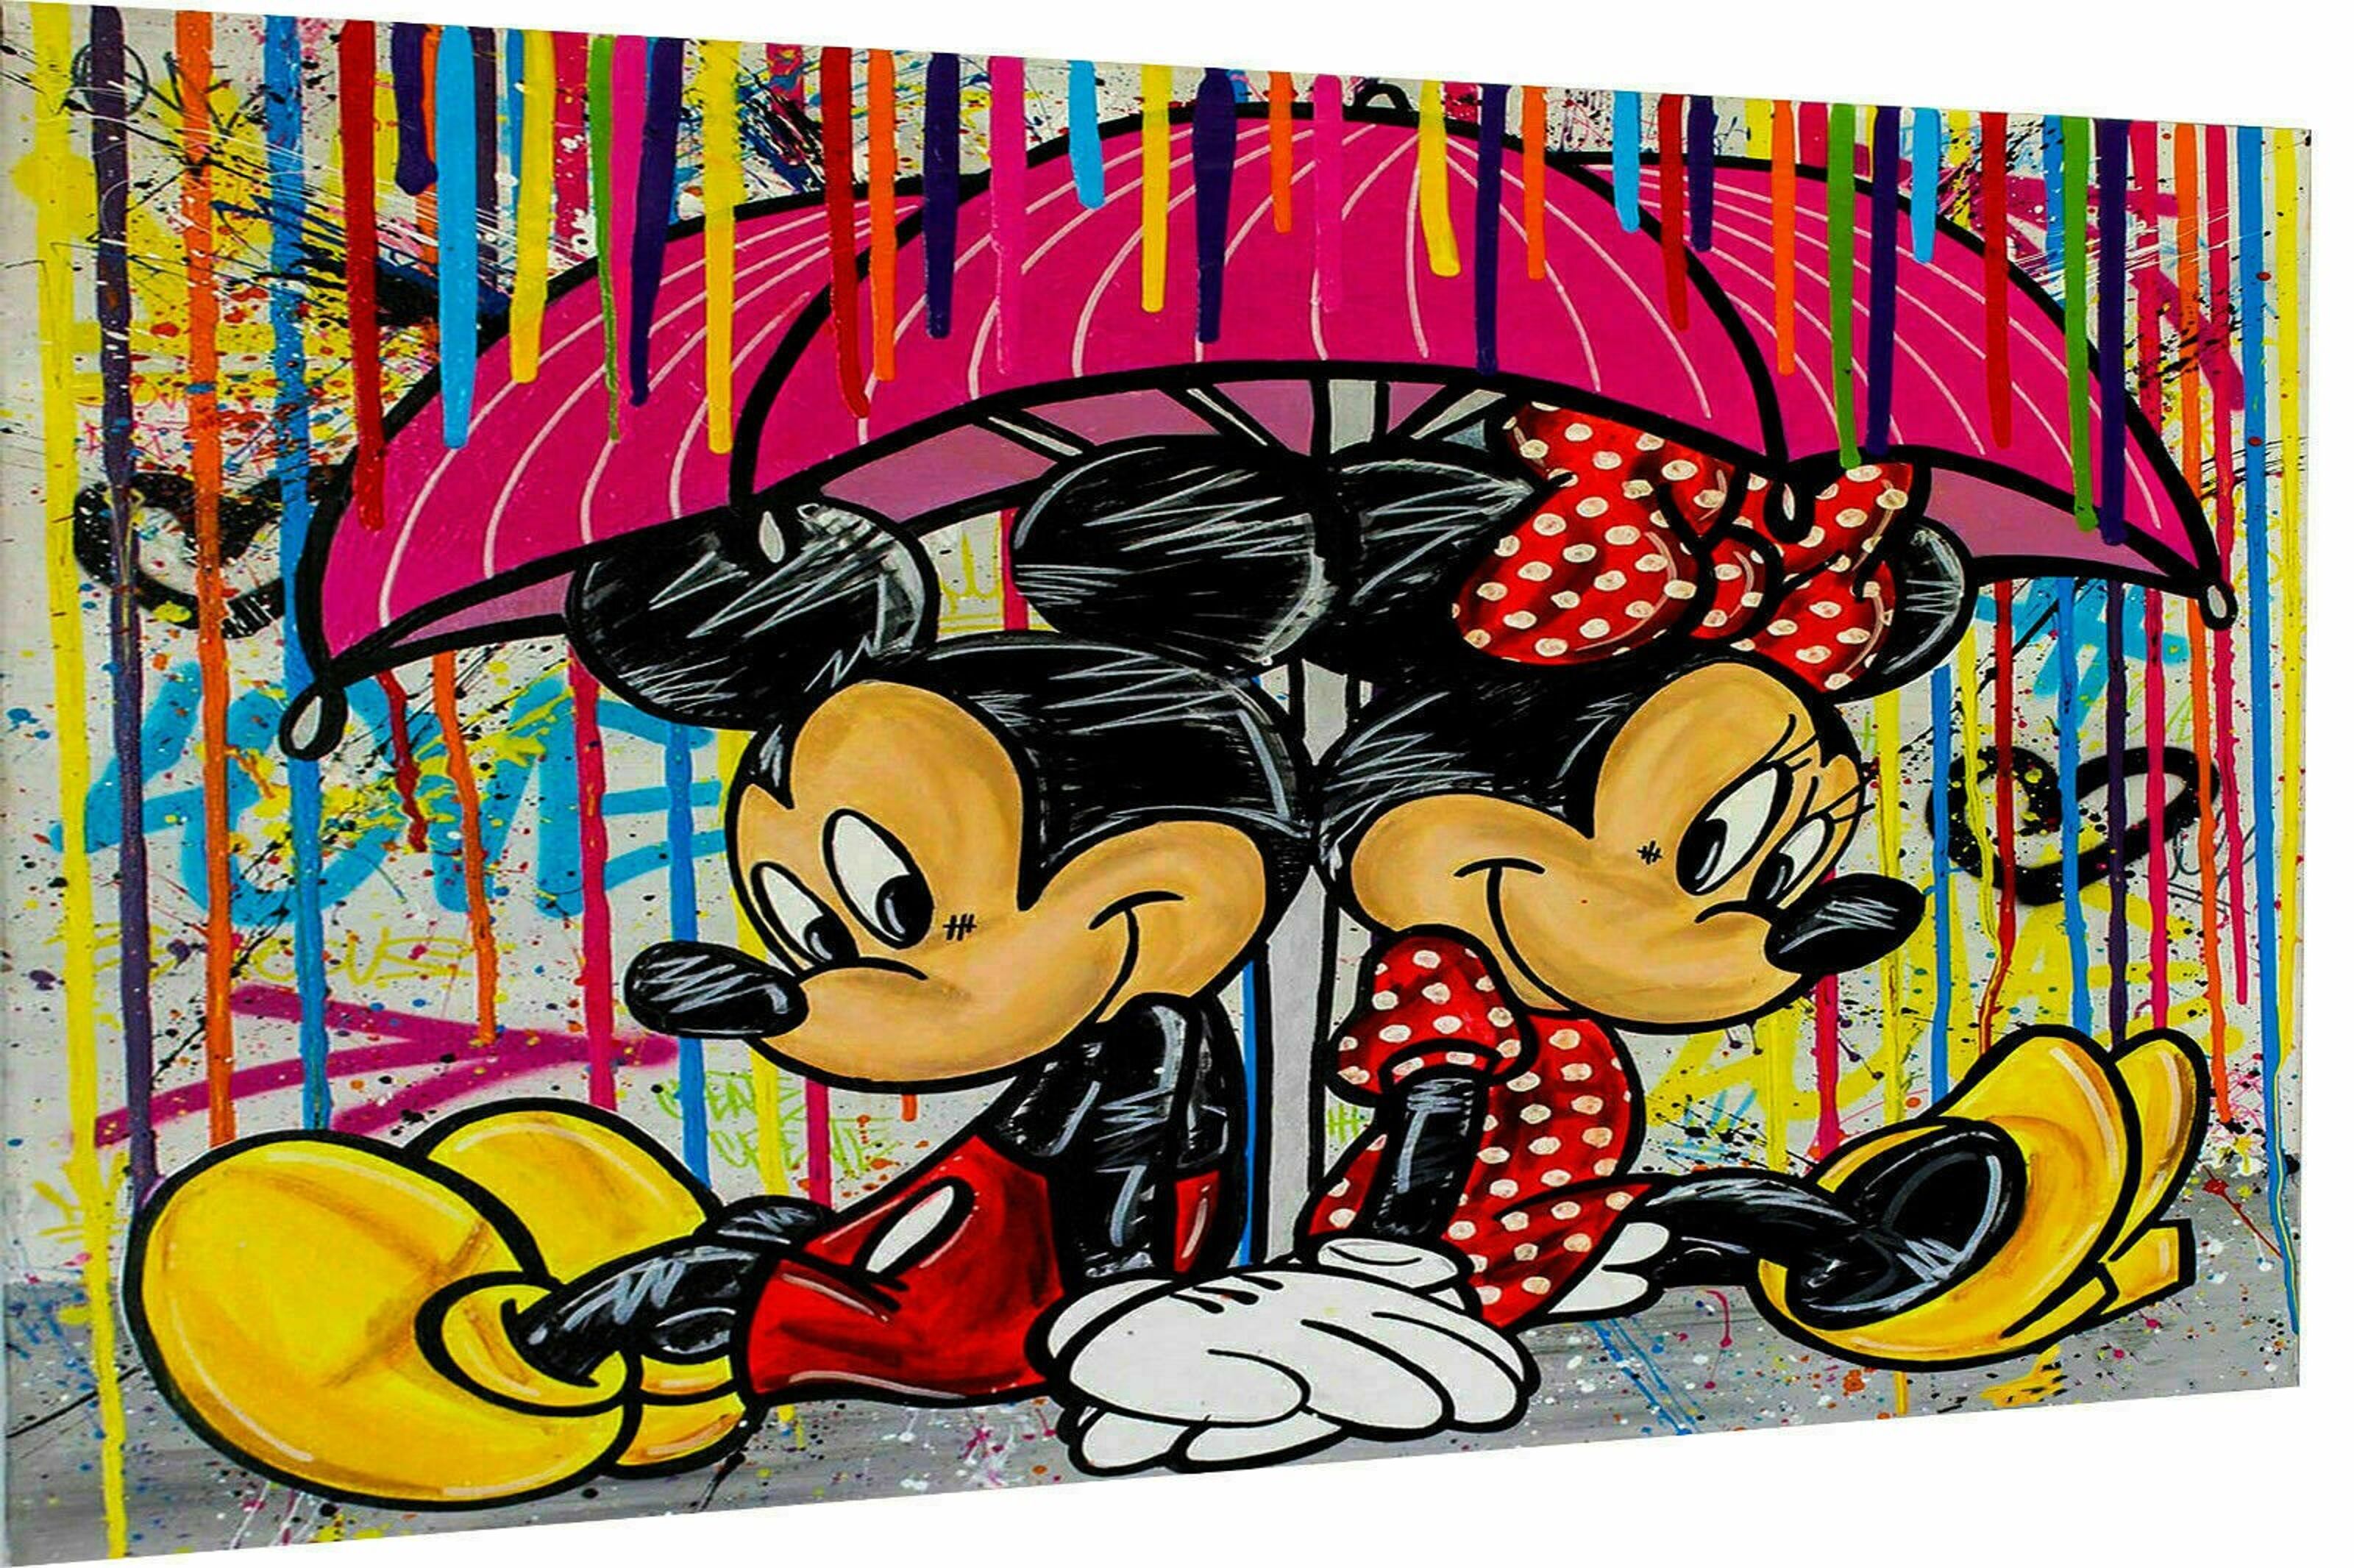 Achat Tableau Pop Art Mickey Mouse Minnie sur Toile - Format